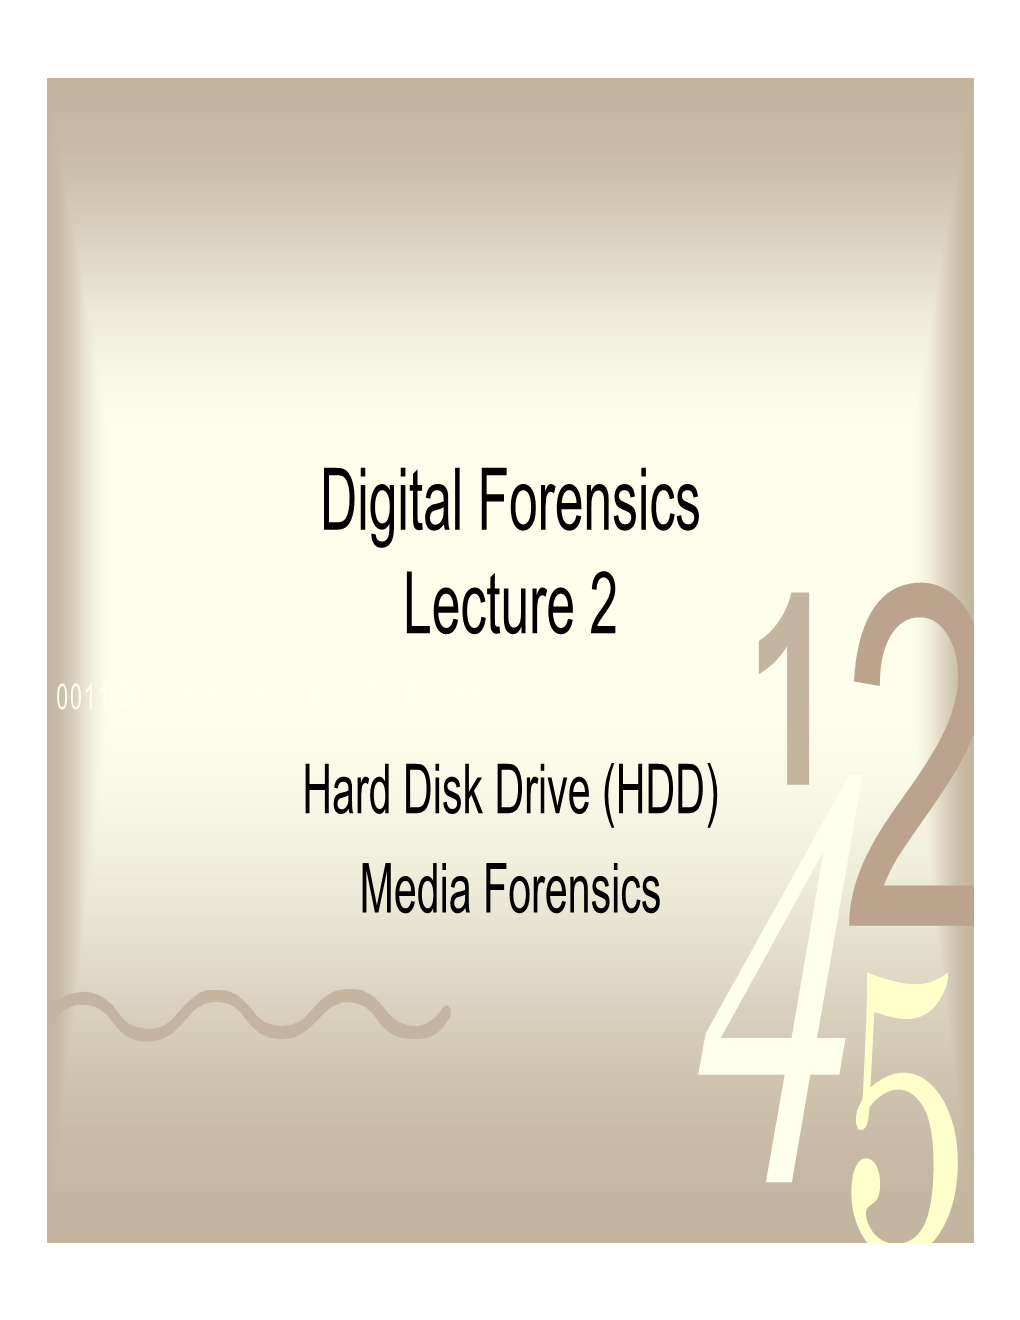 Digital Forensics Lecture 2